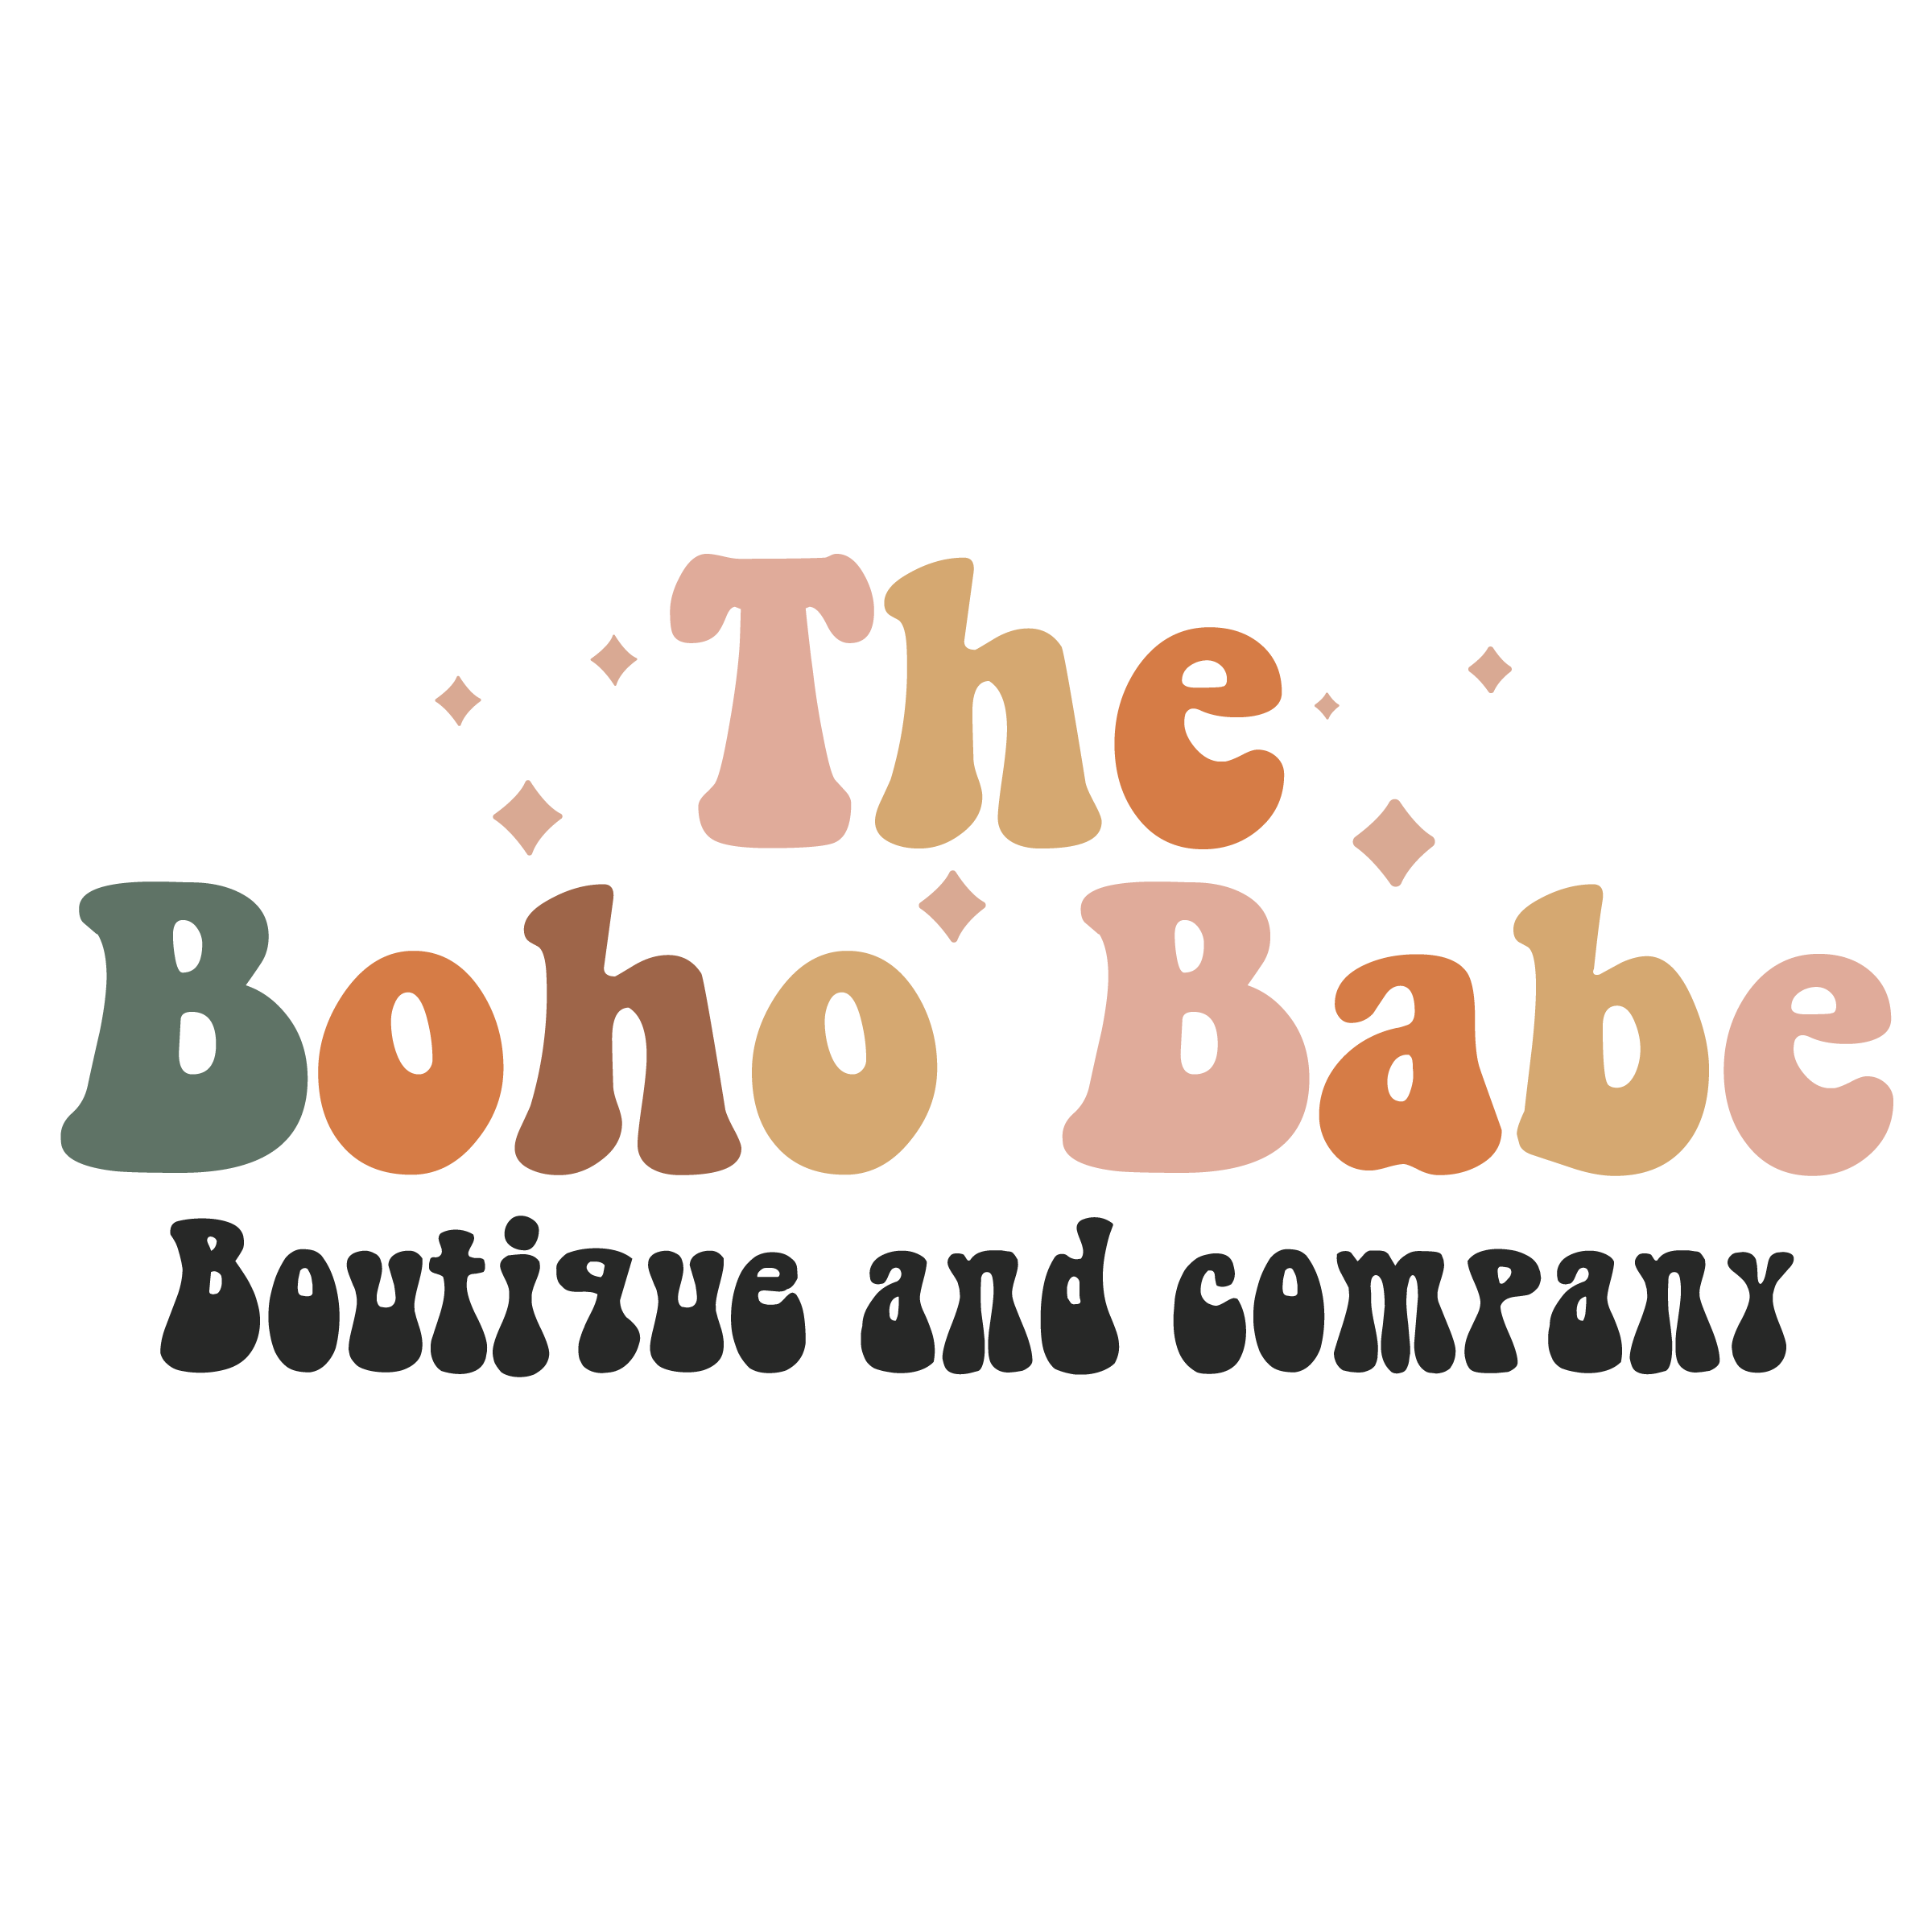 The Boho Babe Boutique and Company